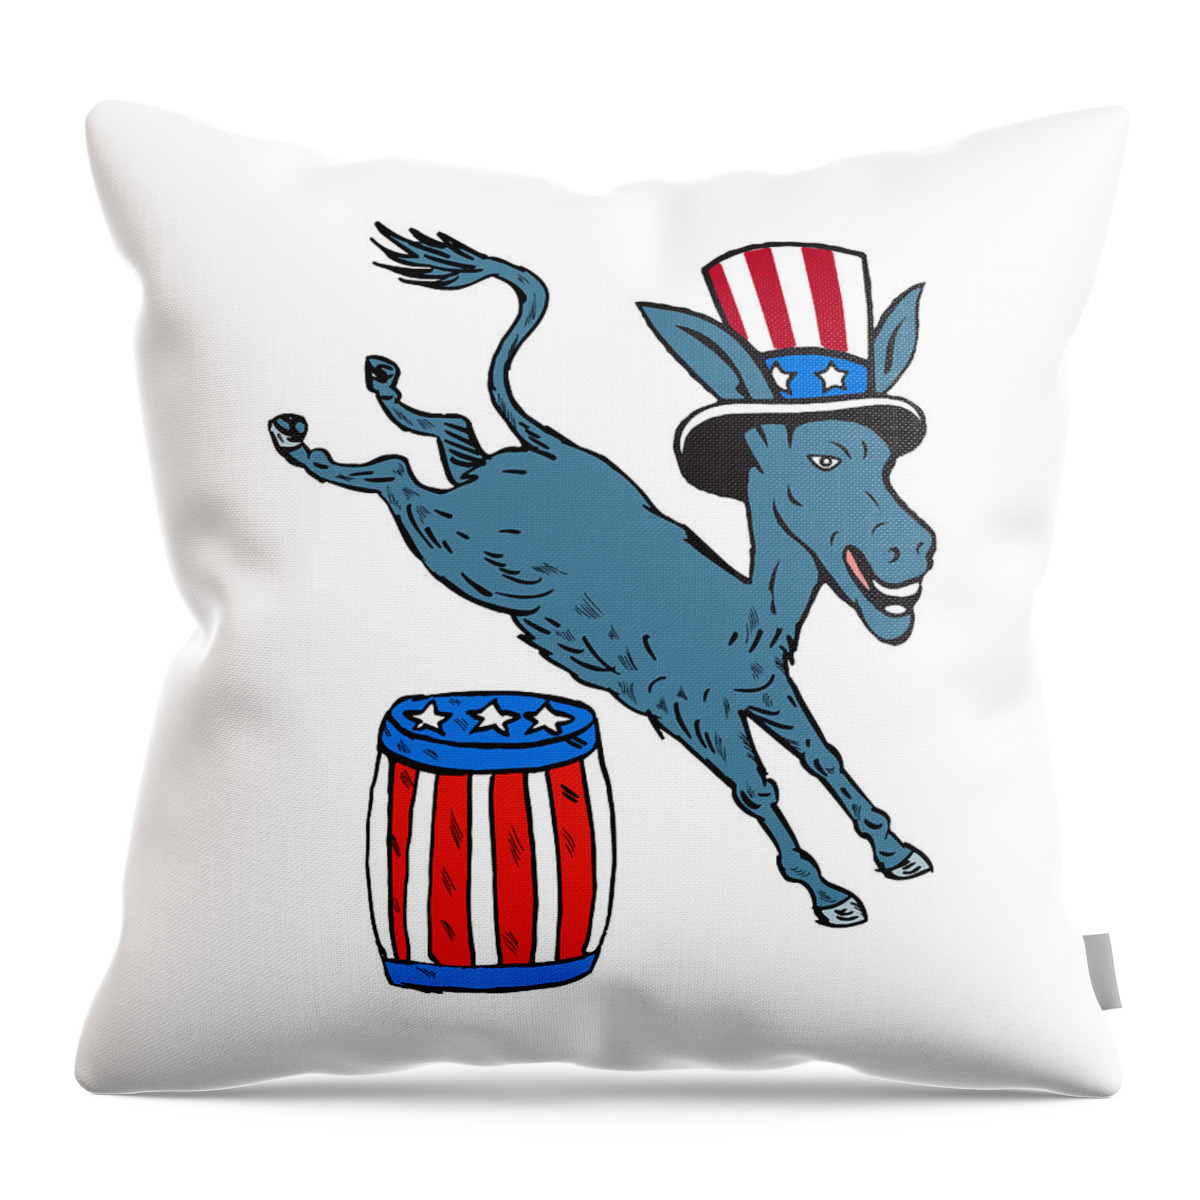 Donkey Throw Pillow featuring the digital art Democrat Donkey Mascot Jumping Over Barrel Cartoon by Aloysius Patrimonio